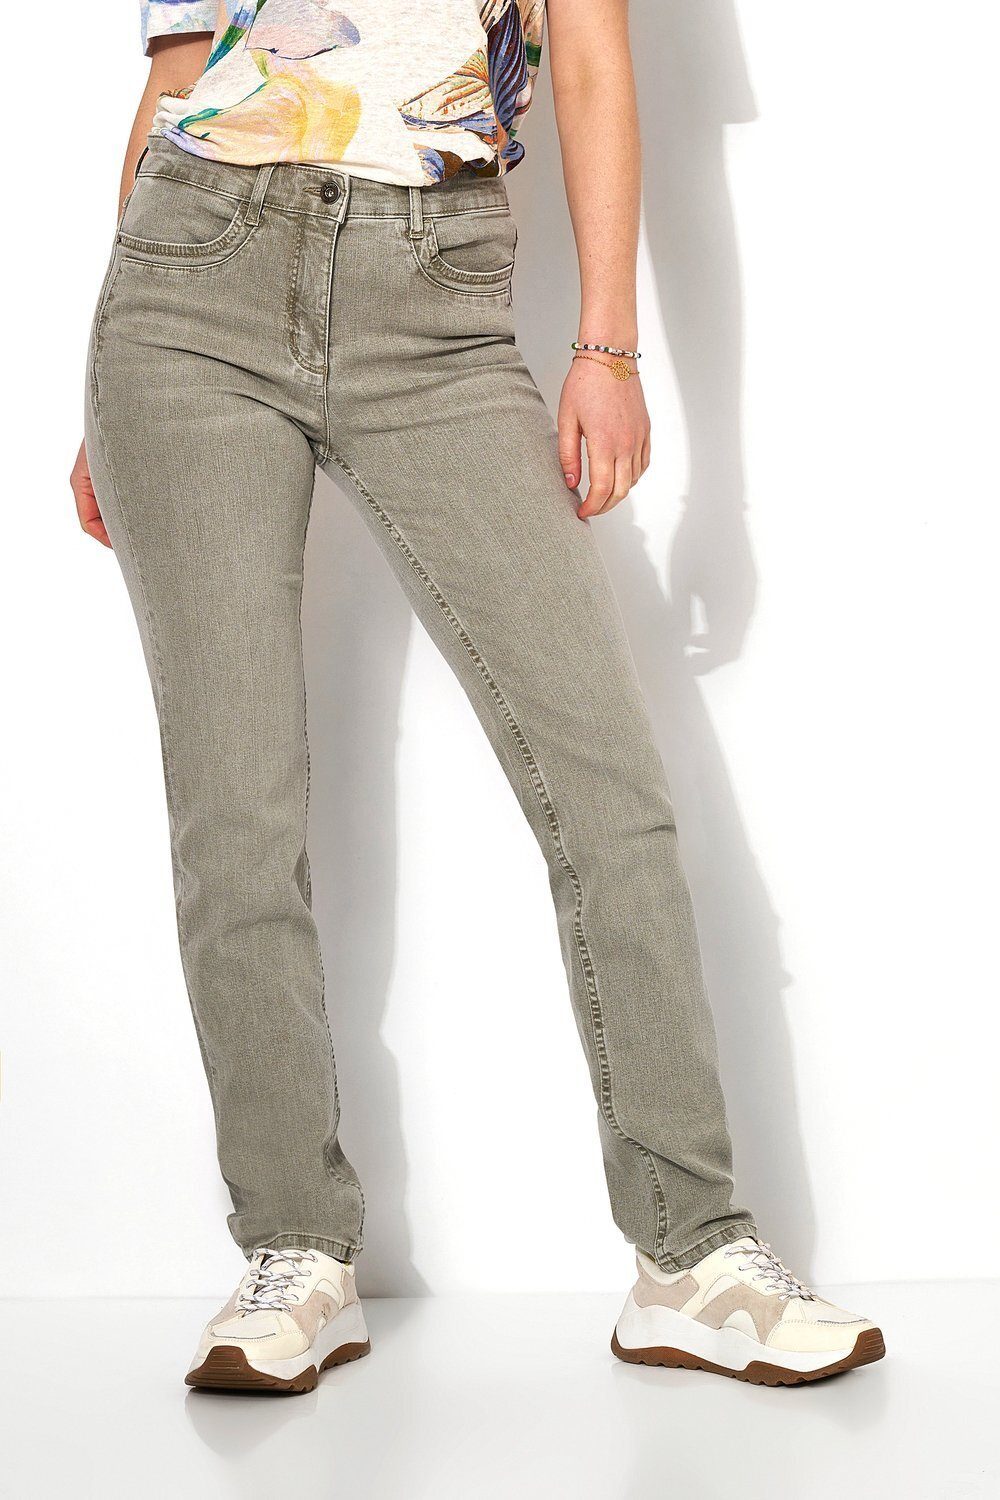 TONI 5-Pocket-Jeans be loved mit raffinierten Taschennähten khaki - 642 | Straight-Fit Jeans